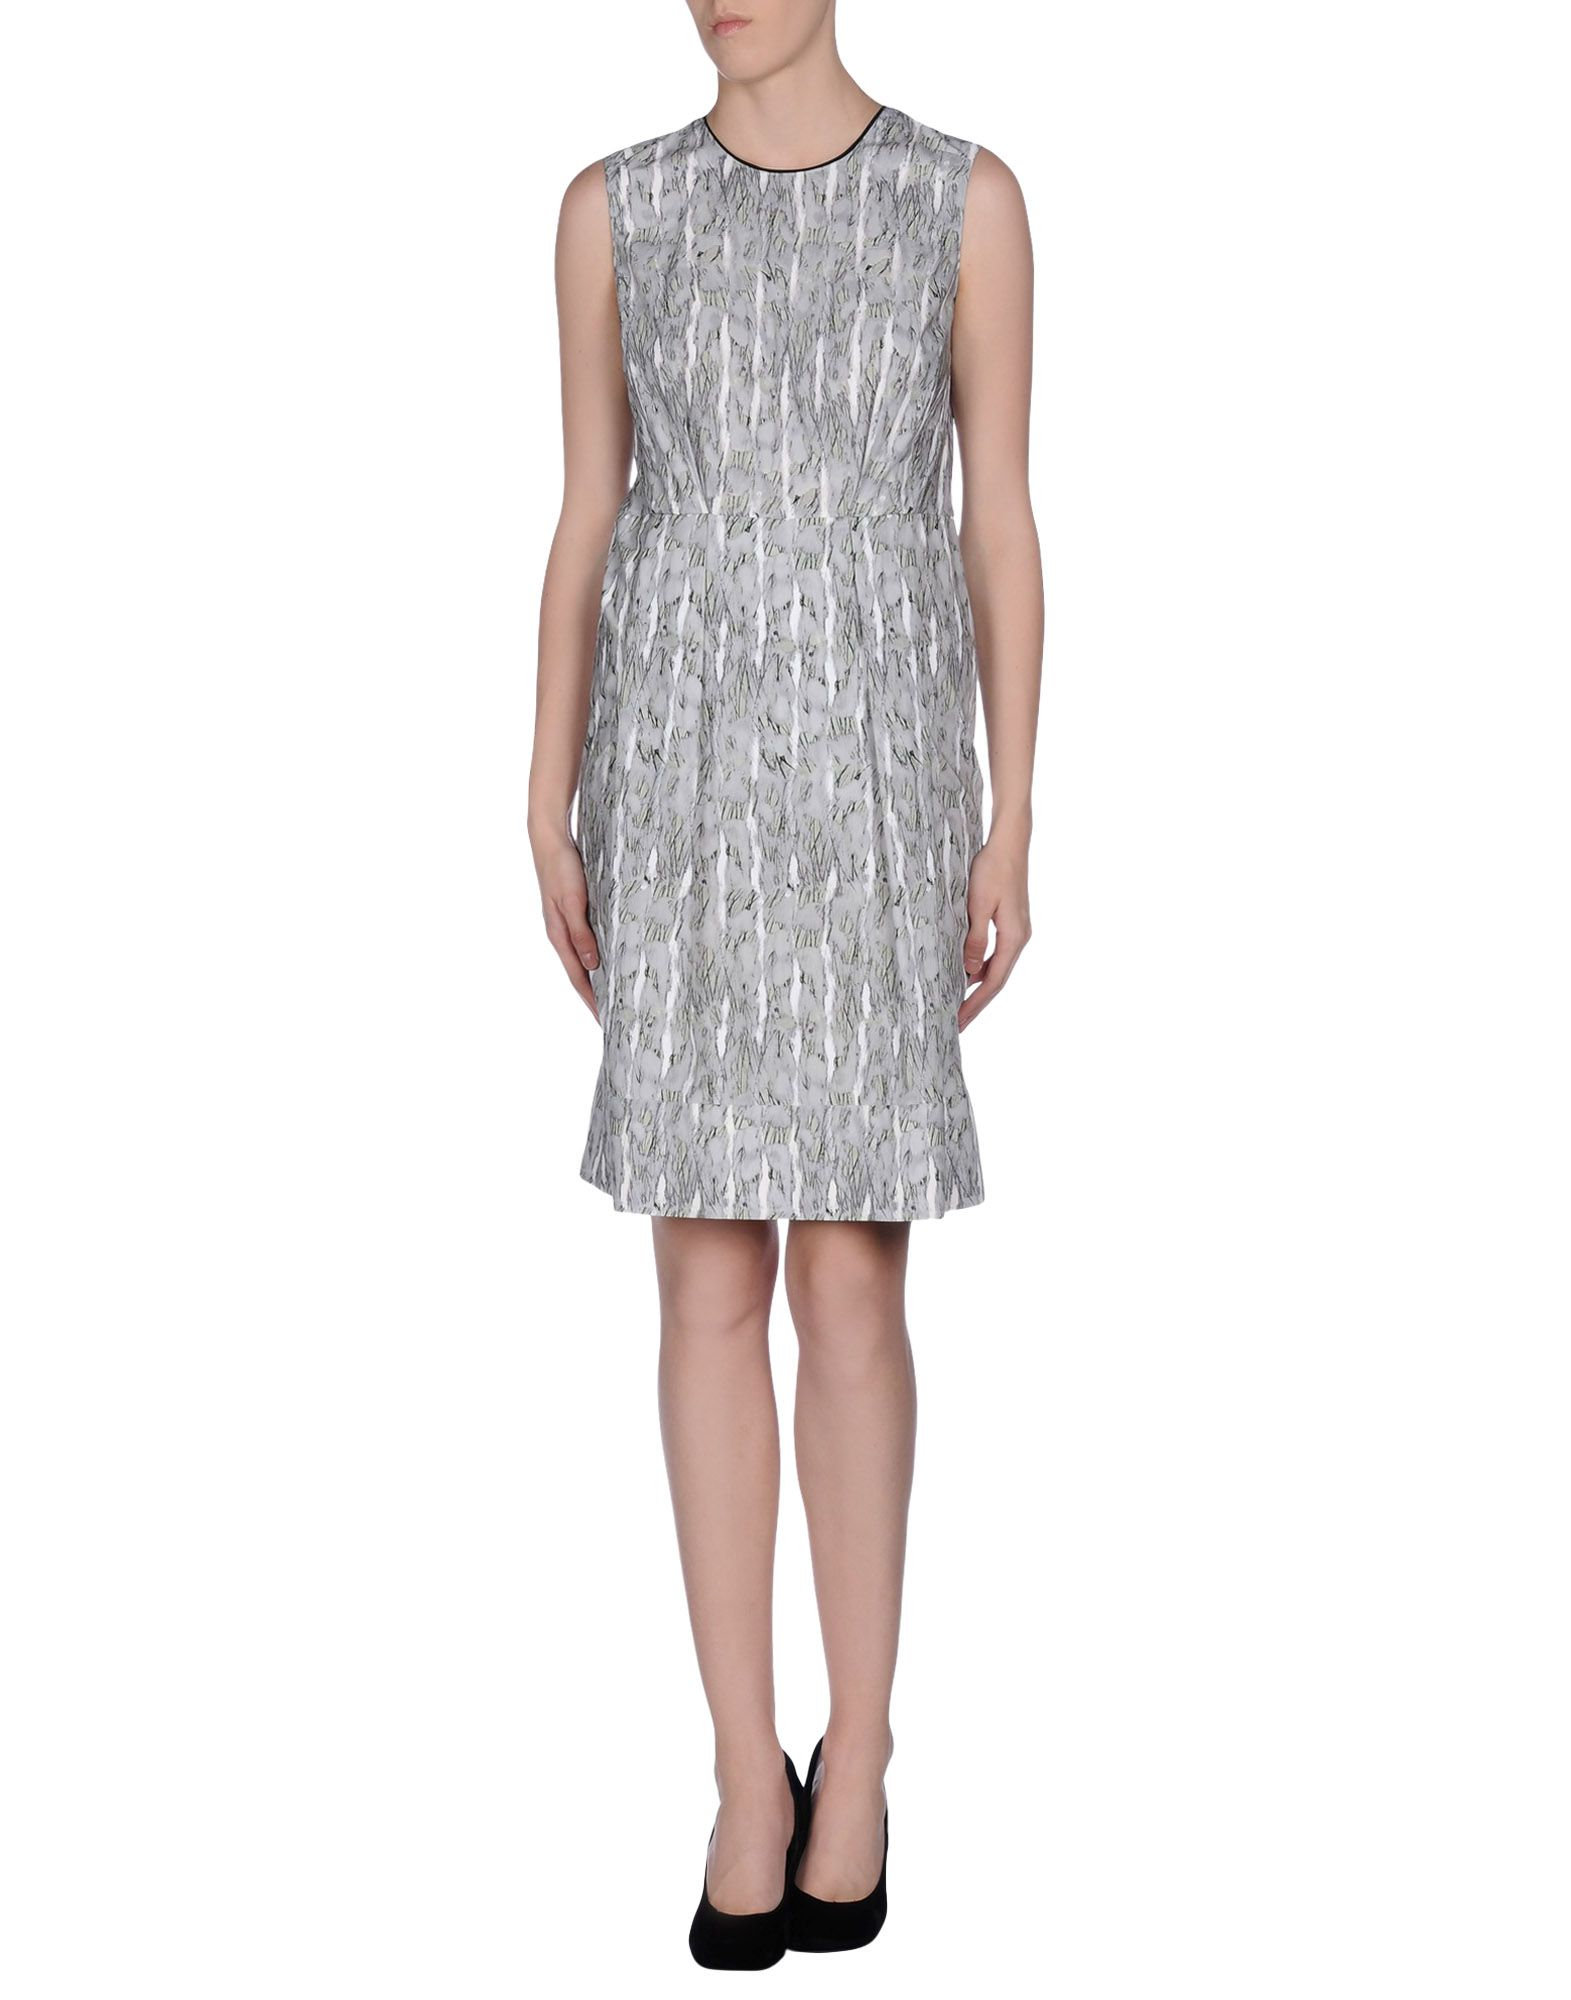 Lyst - Marni Knee-length Dress in Gray